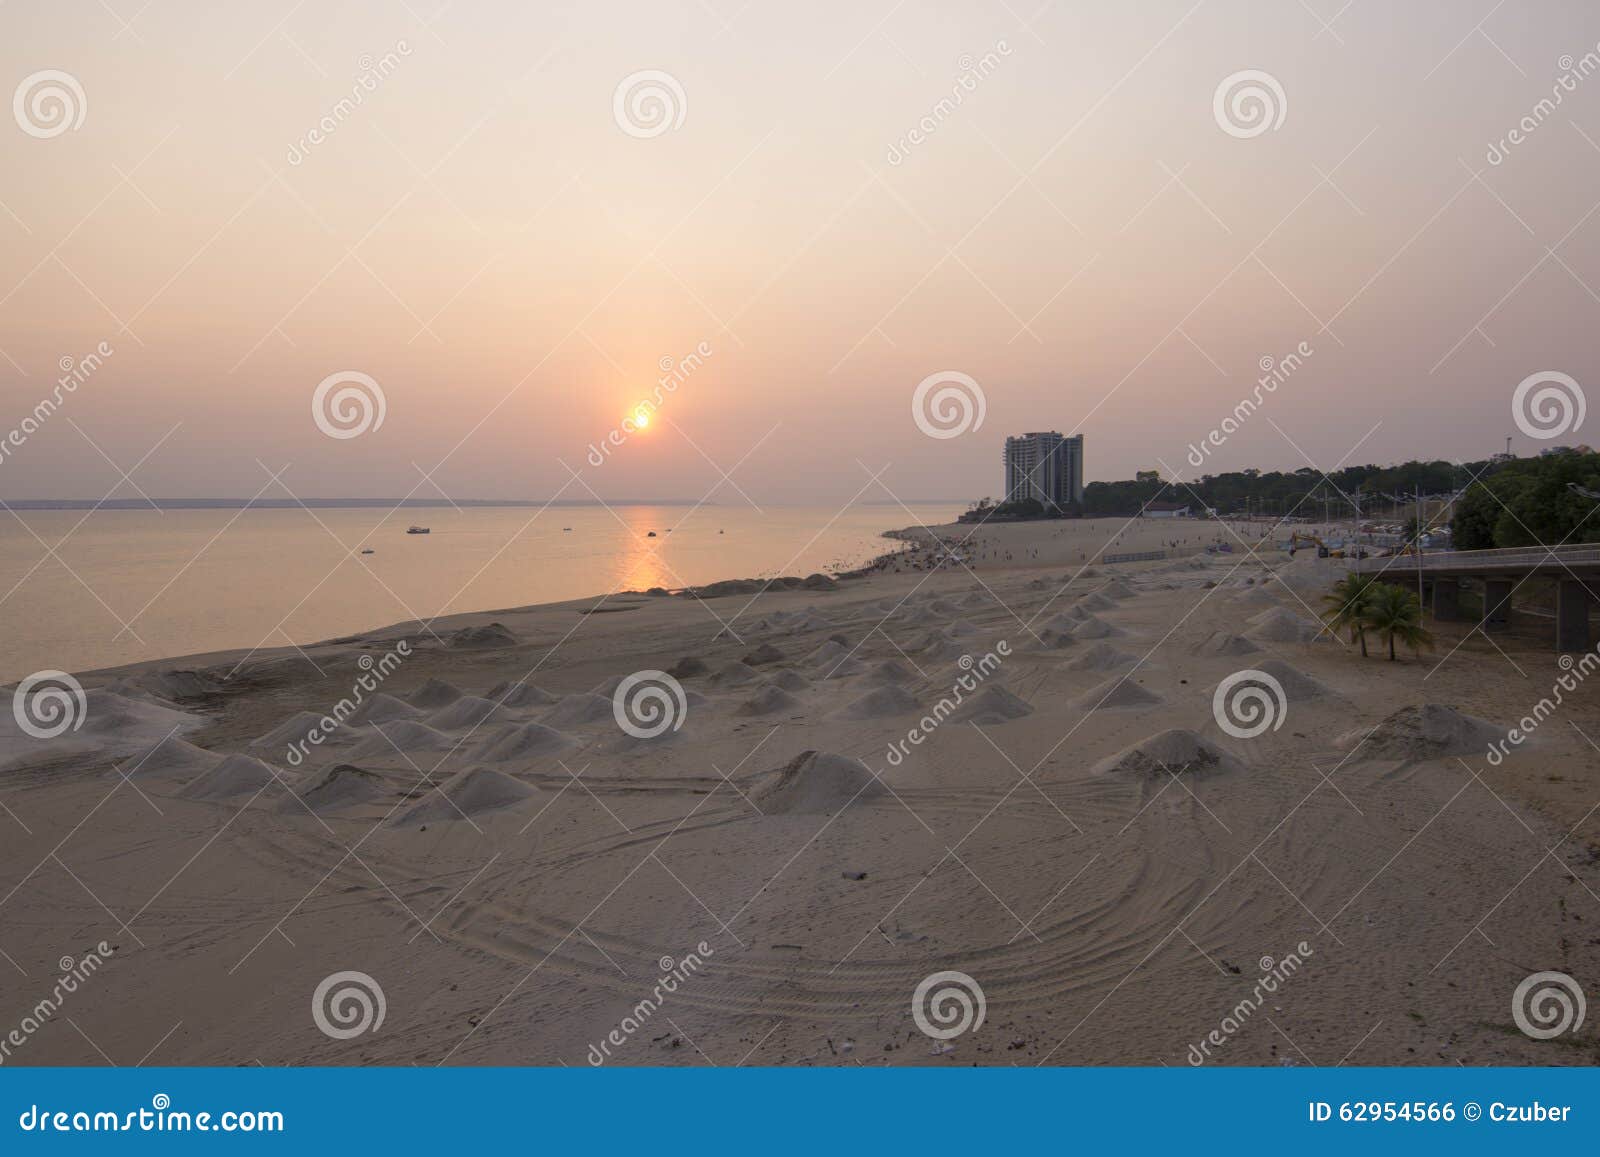 mounds of beach sand on rio negro